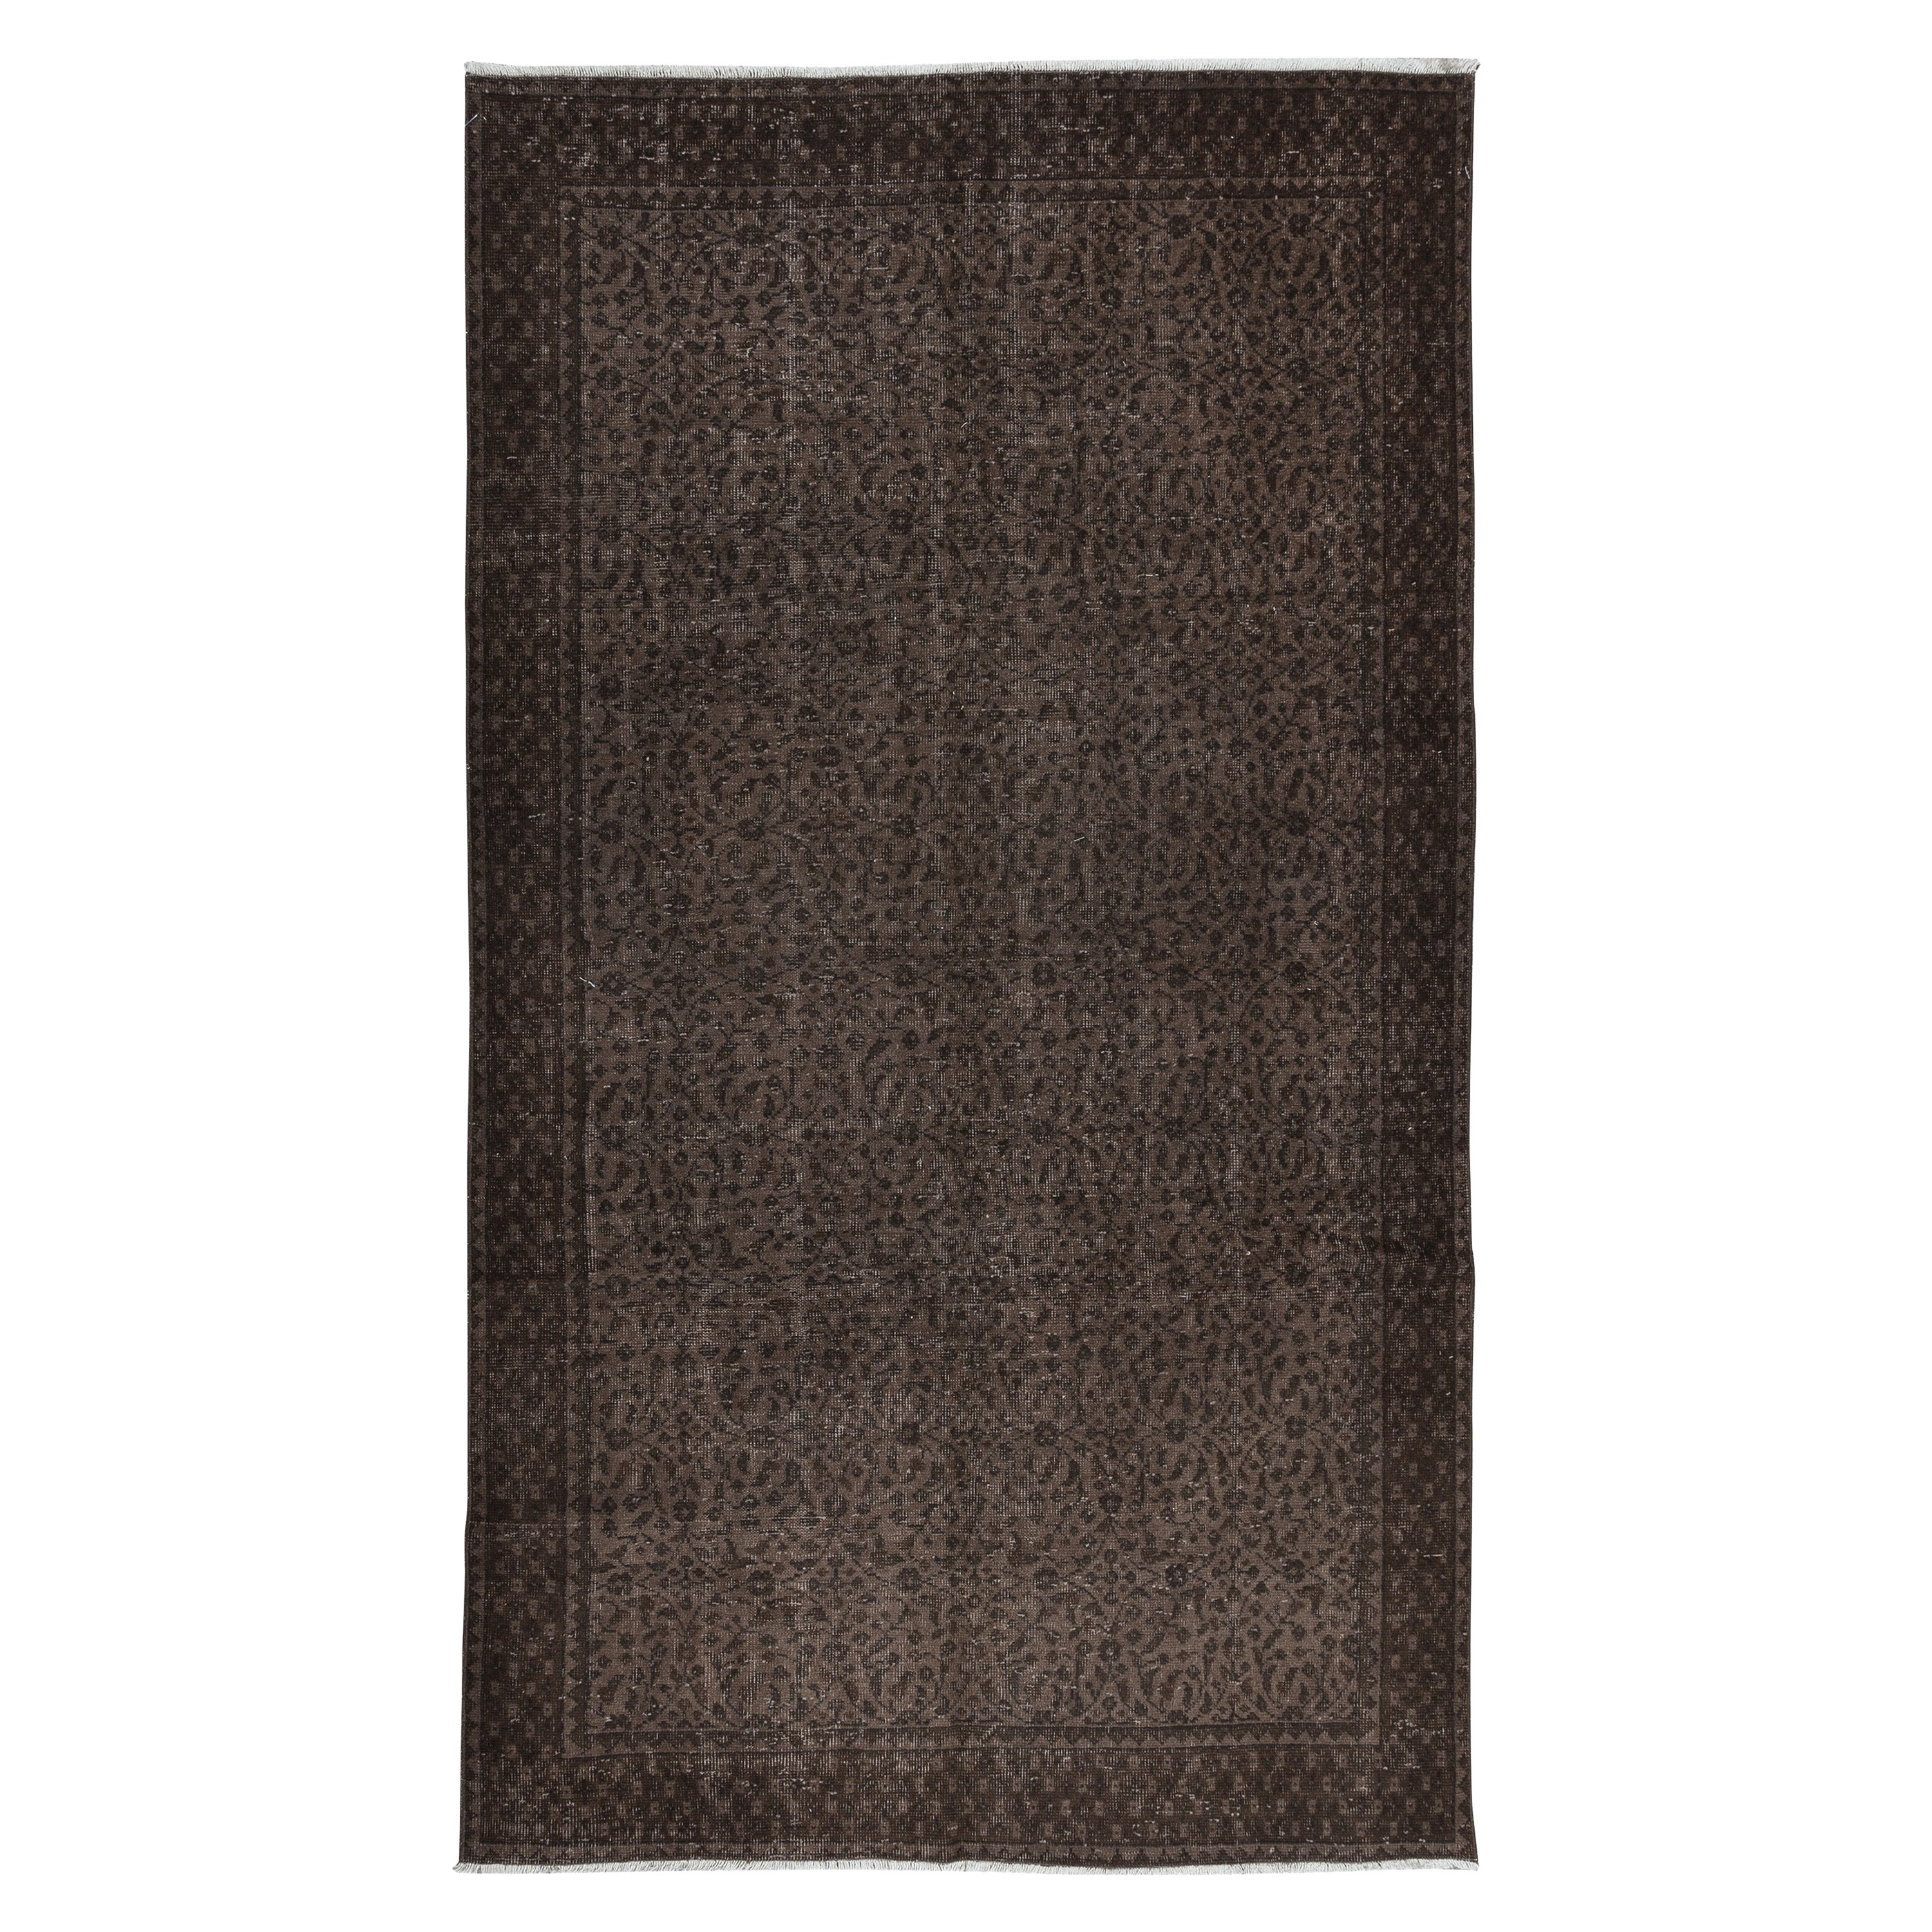 5.4x9 Ft Handmade Brown Floral Area Rug from Turkey, Modern Turkish Wool Carpet (tapis de laine turc moderne)